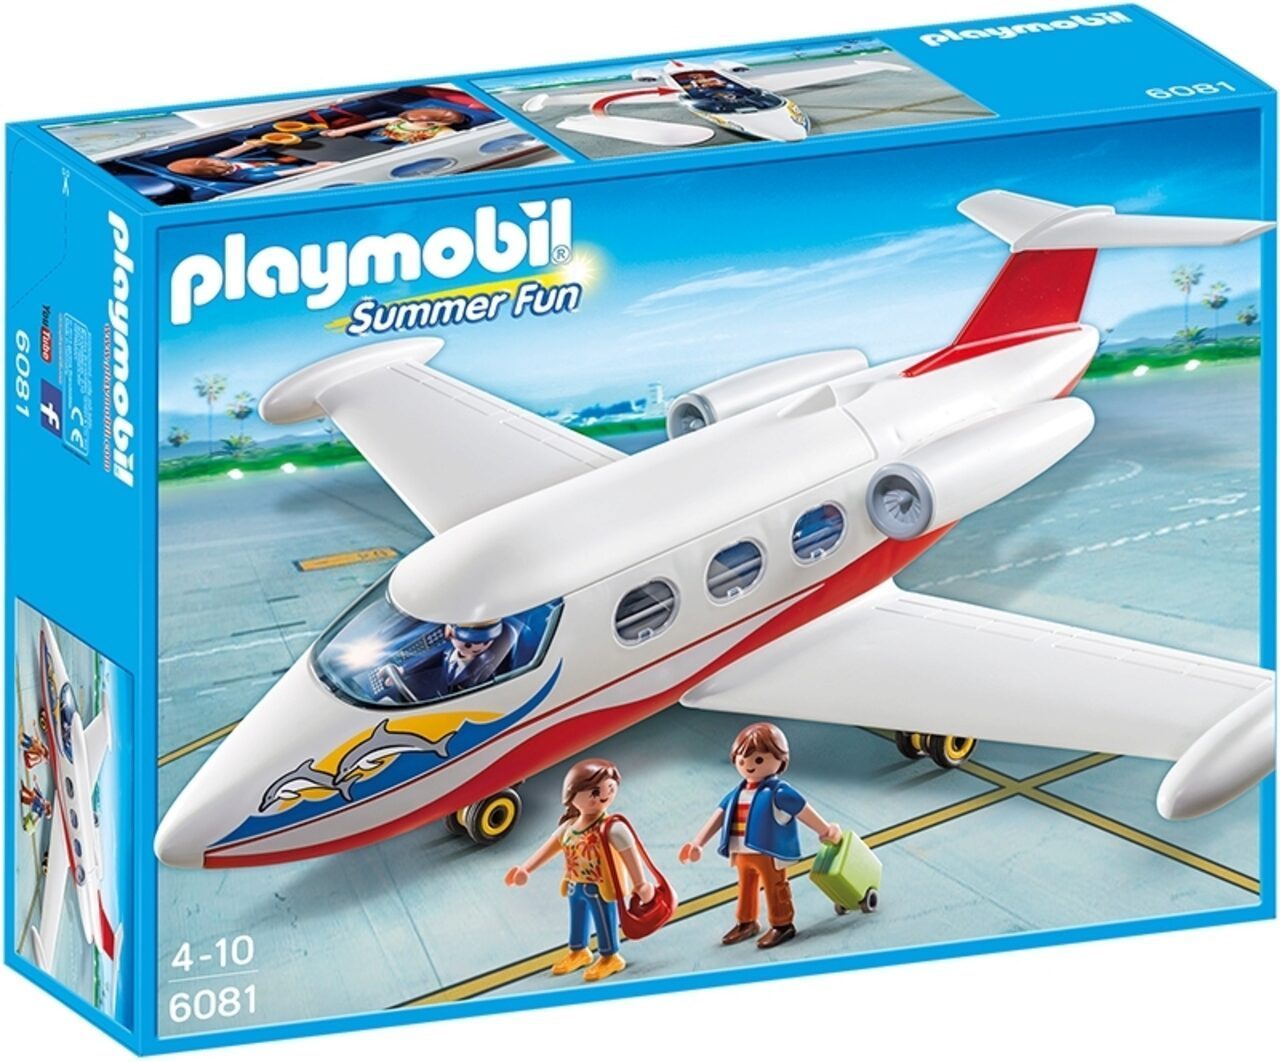 Playmobil Ferienflieger 100-6081